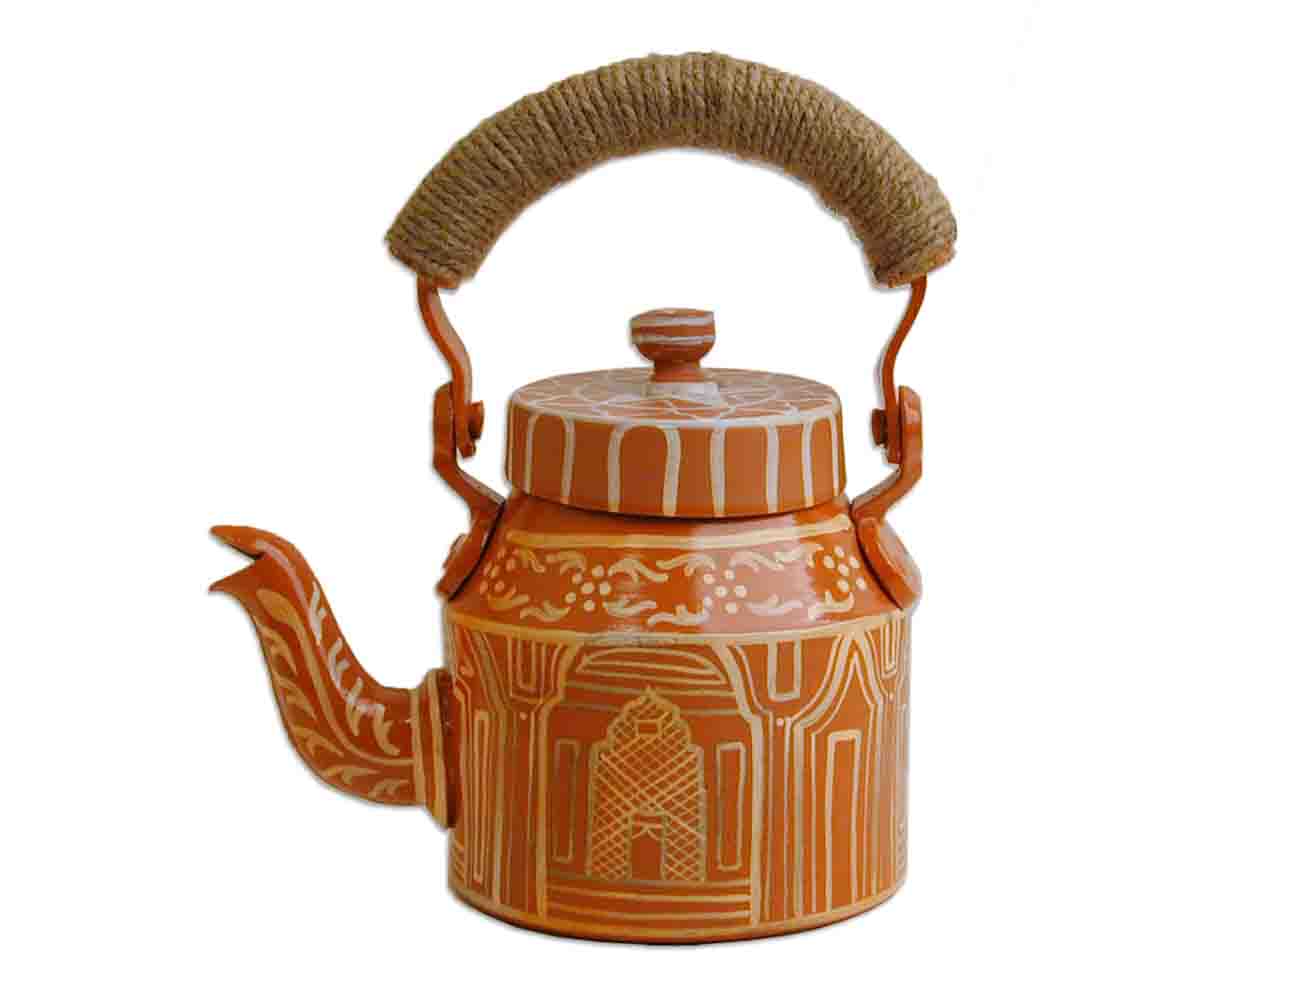 https://taooftea.com/wp-content/uploads/2020/11/Painted-Teapot-Jaipur-Sl-1.jpg